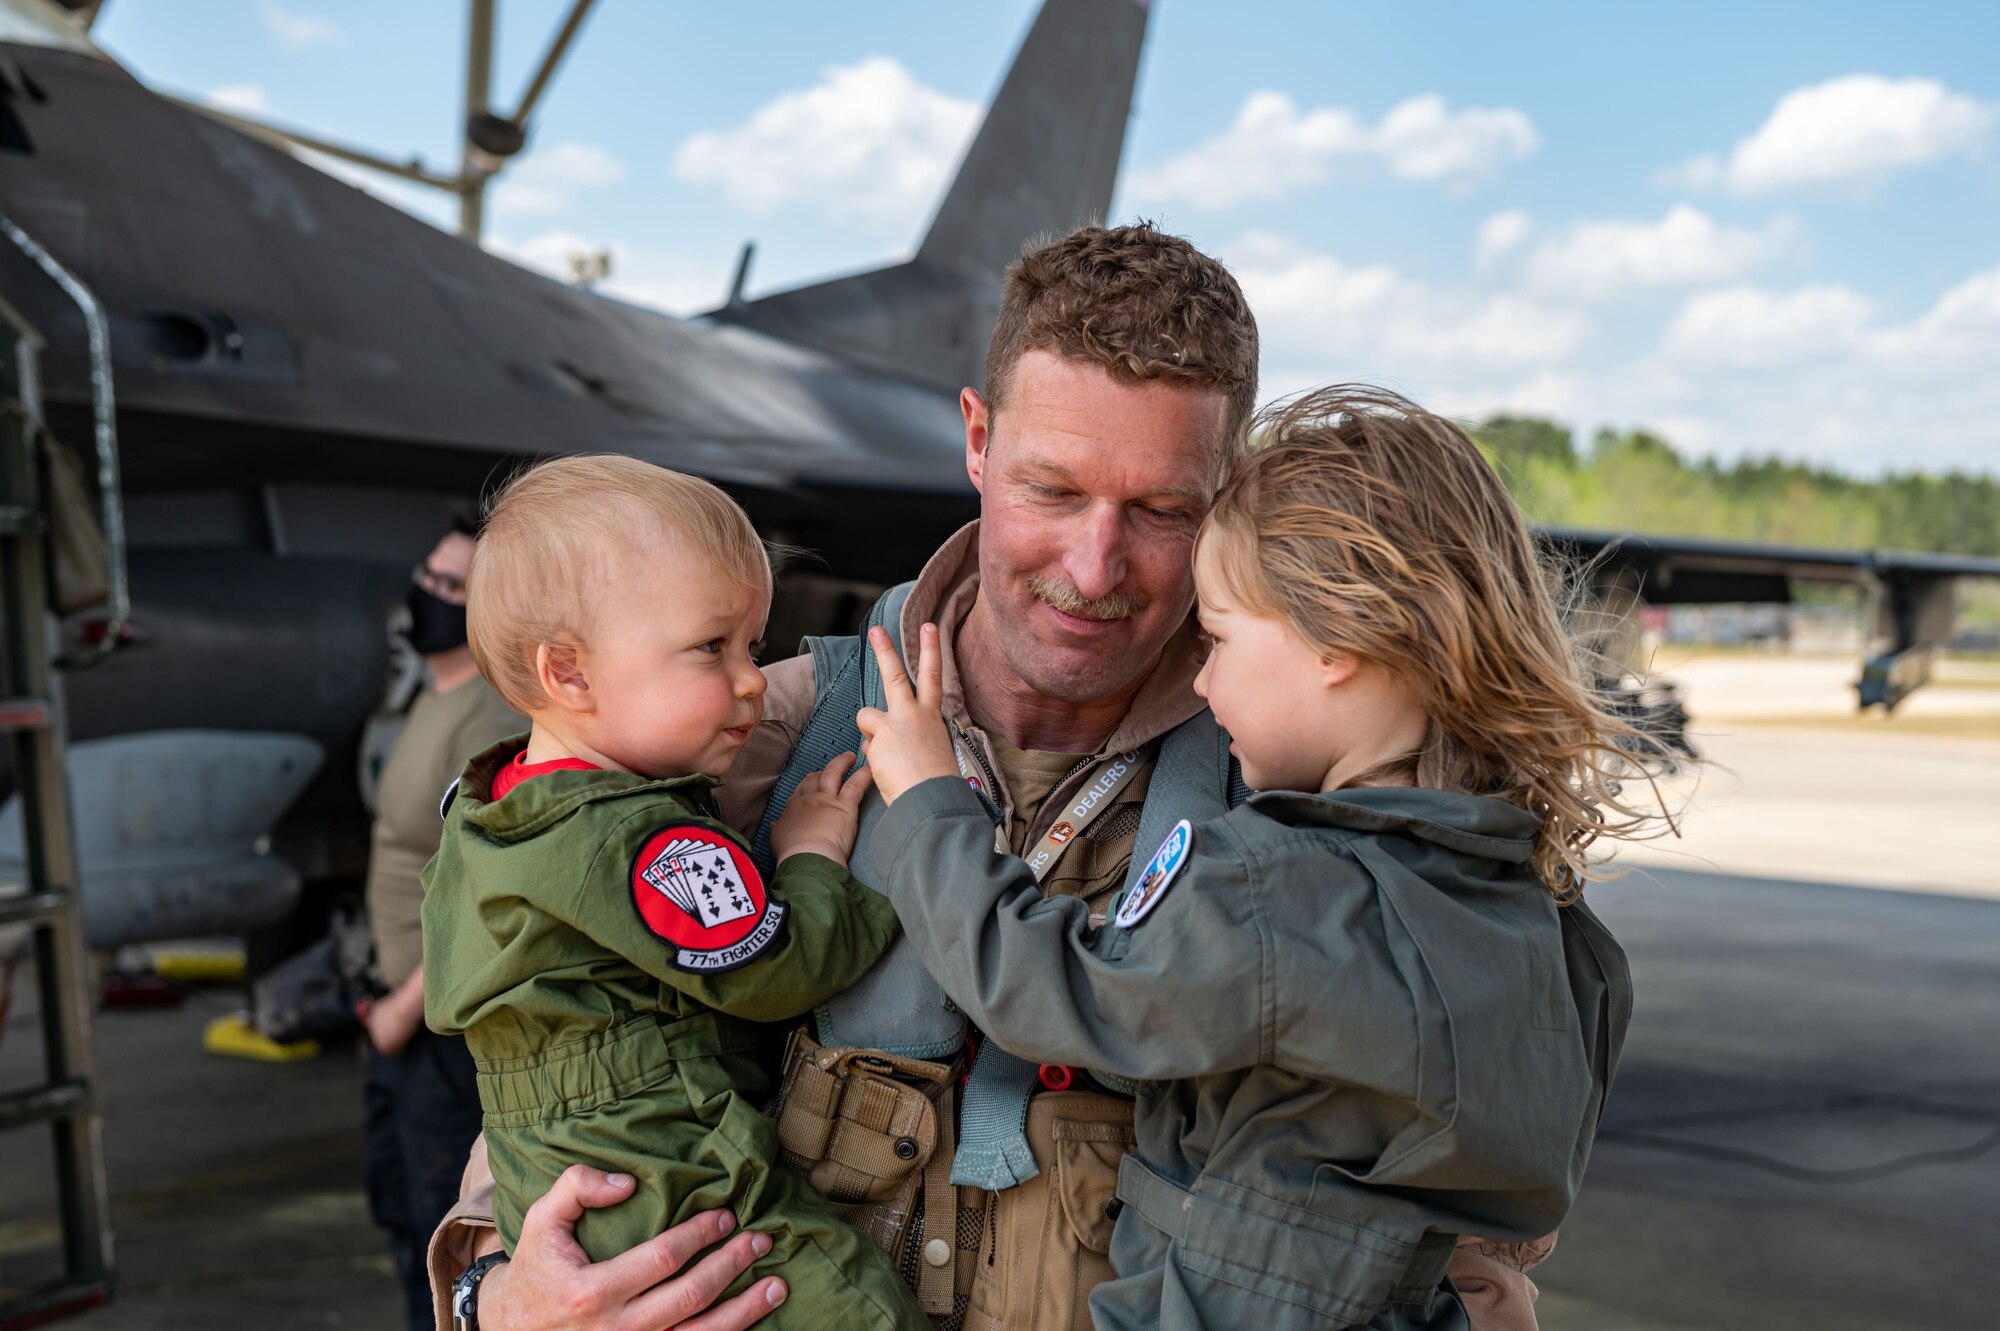 A photo of a pilot embracing children.